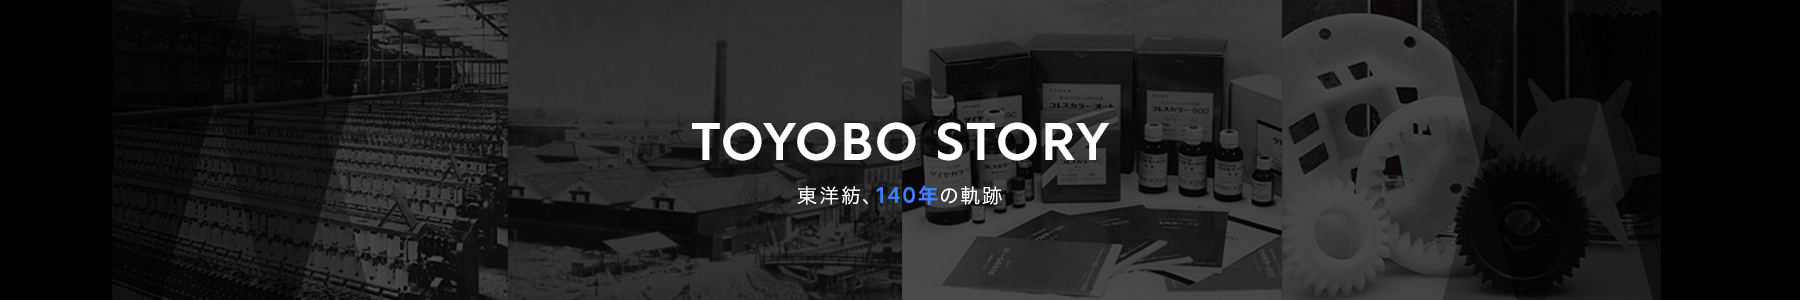 TOYOBO STORY 東洋紡、140年の奇跡